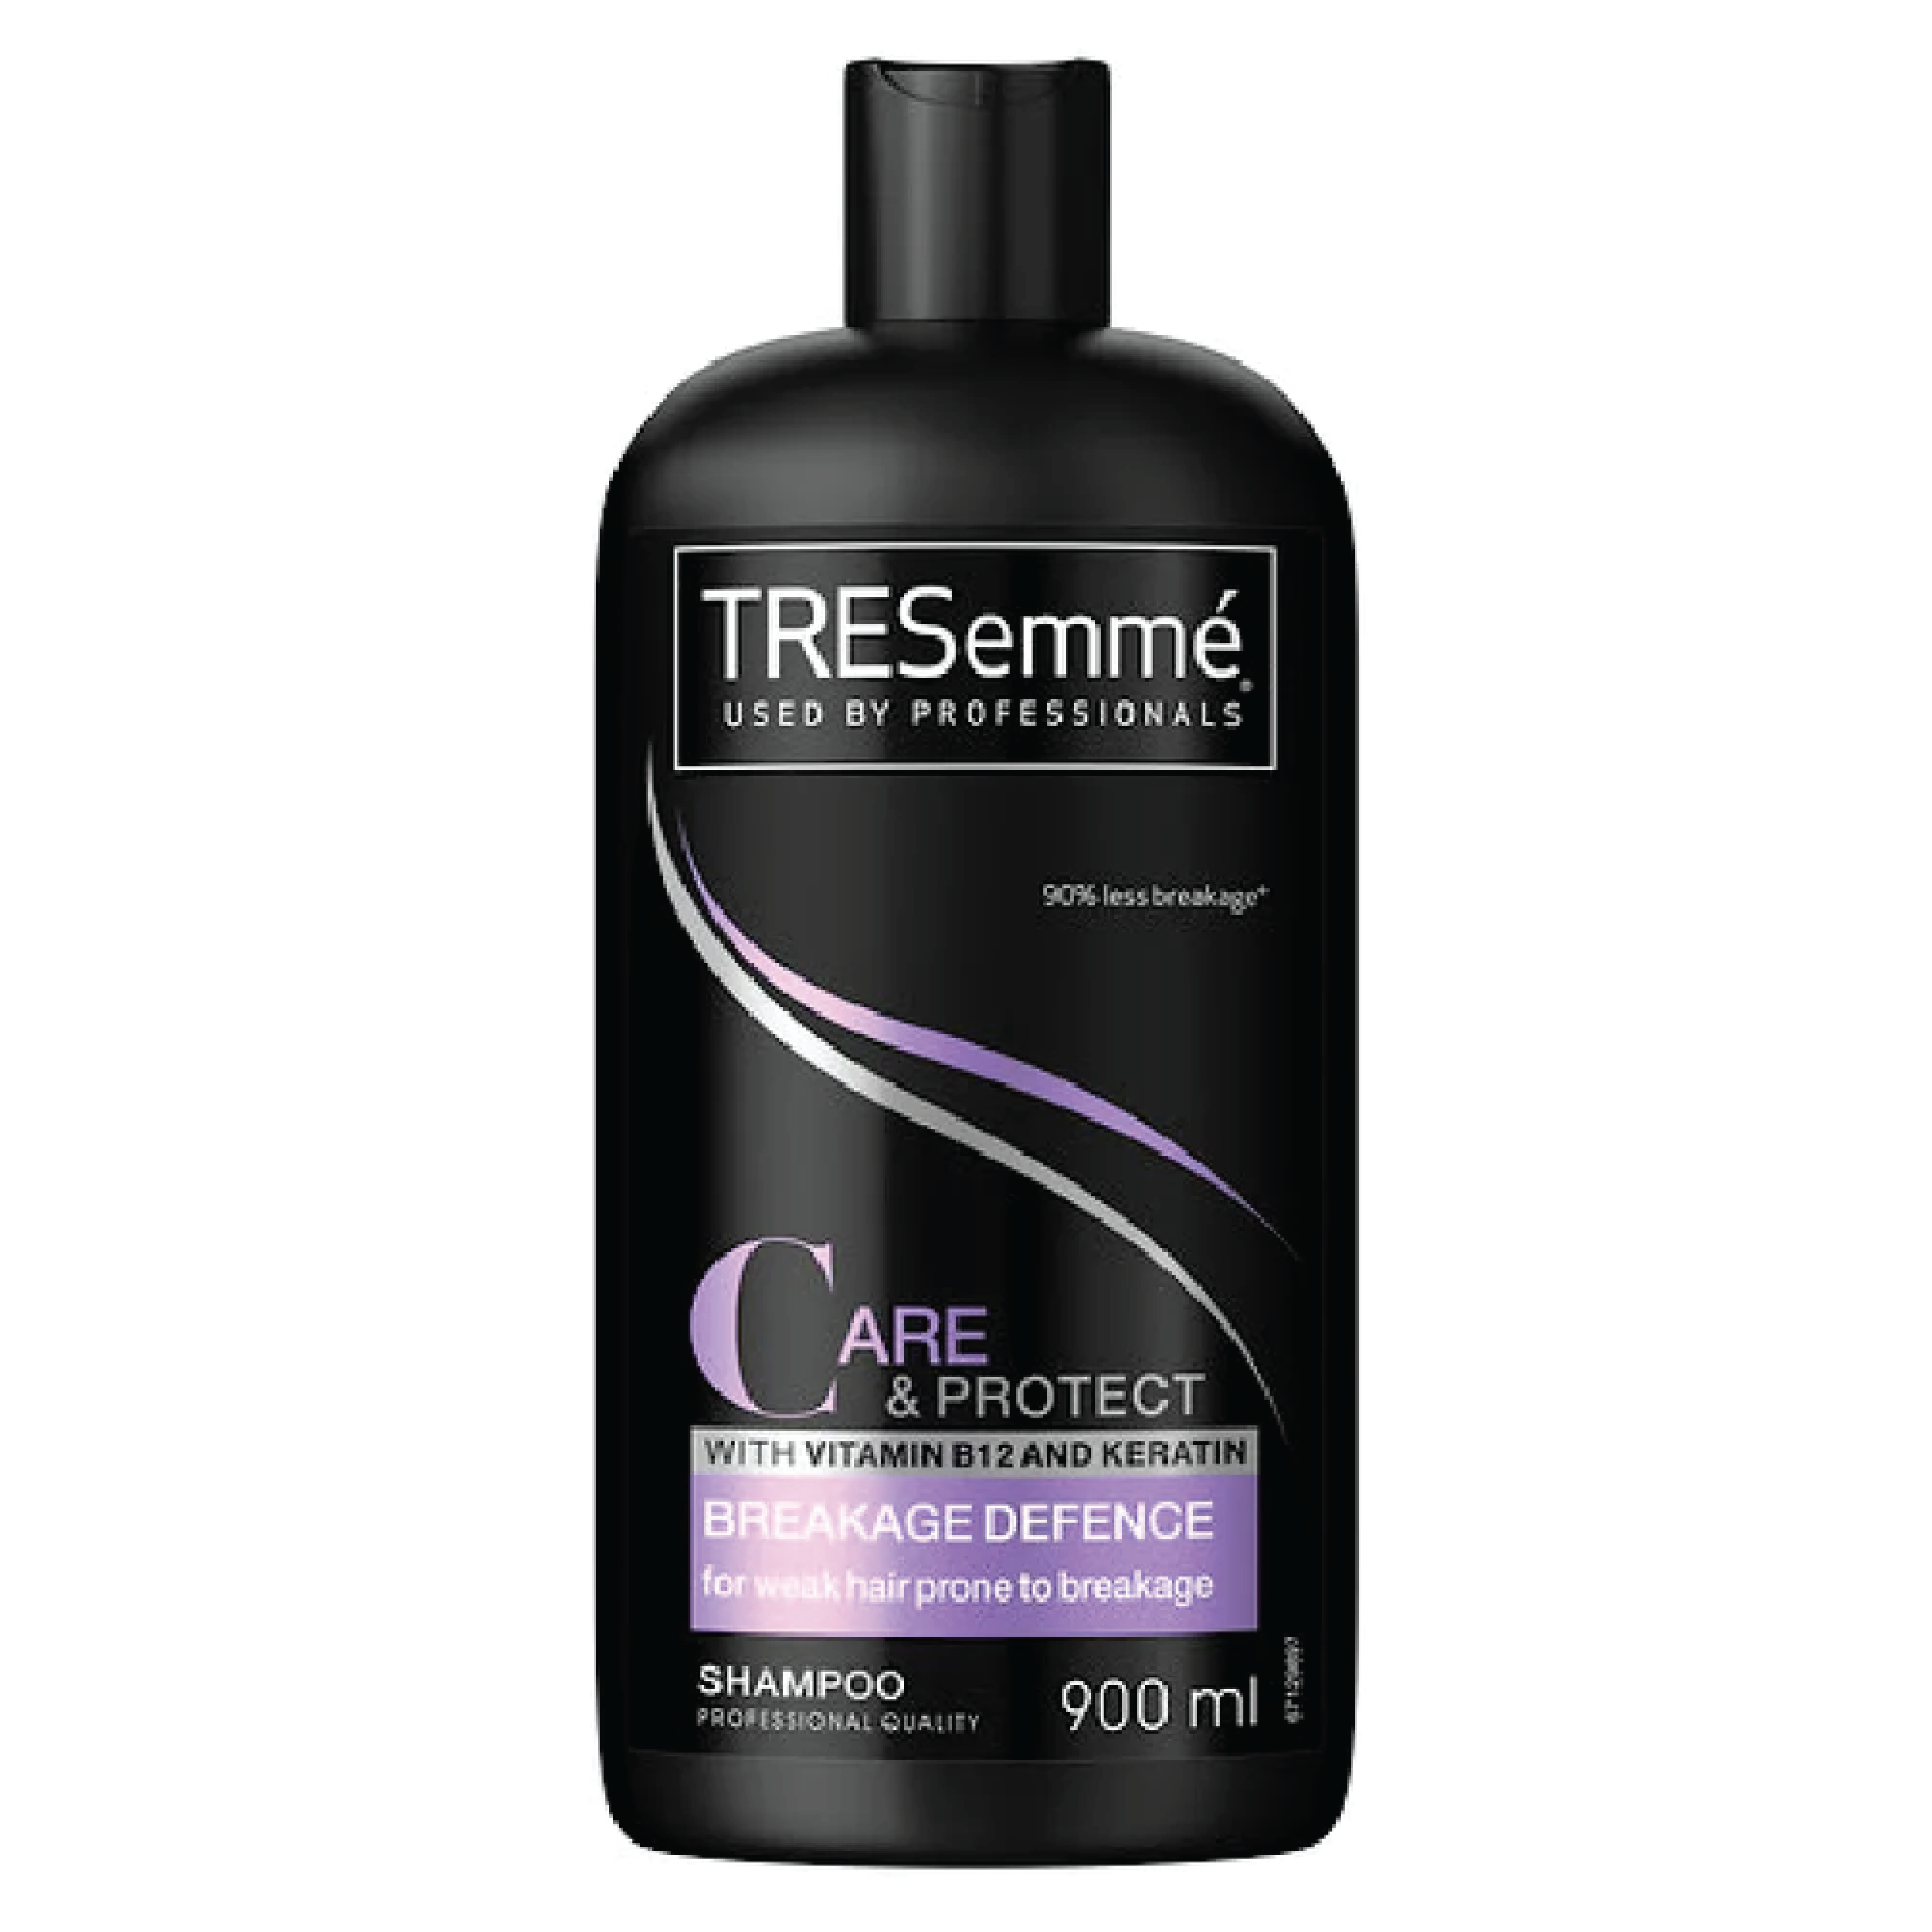 TreSemme' Care & Protect Breakage Defence Shampoo 900ml